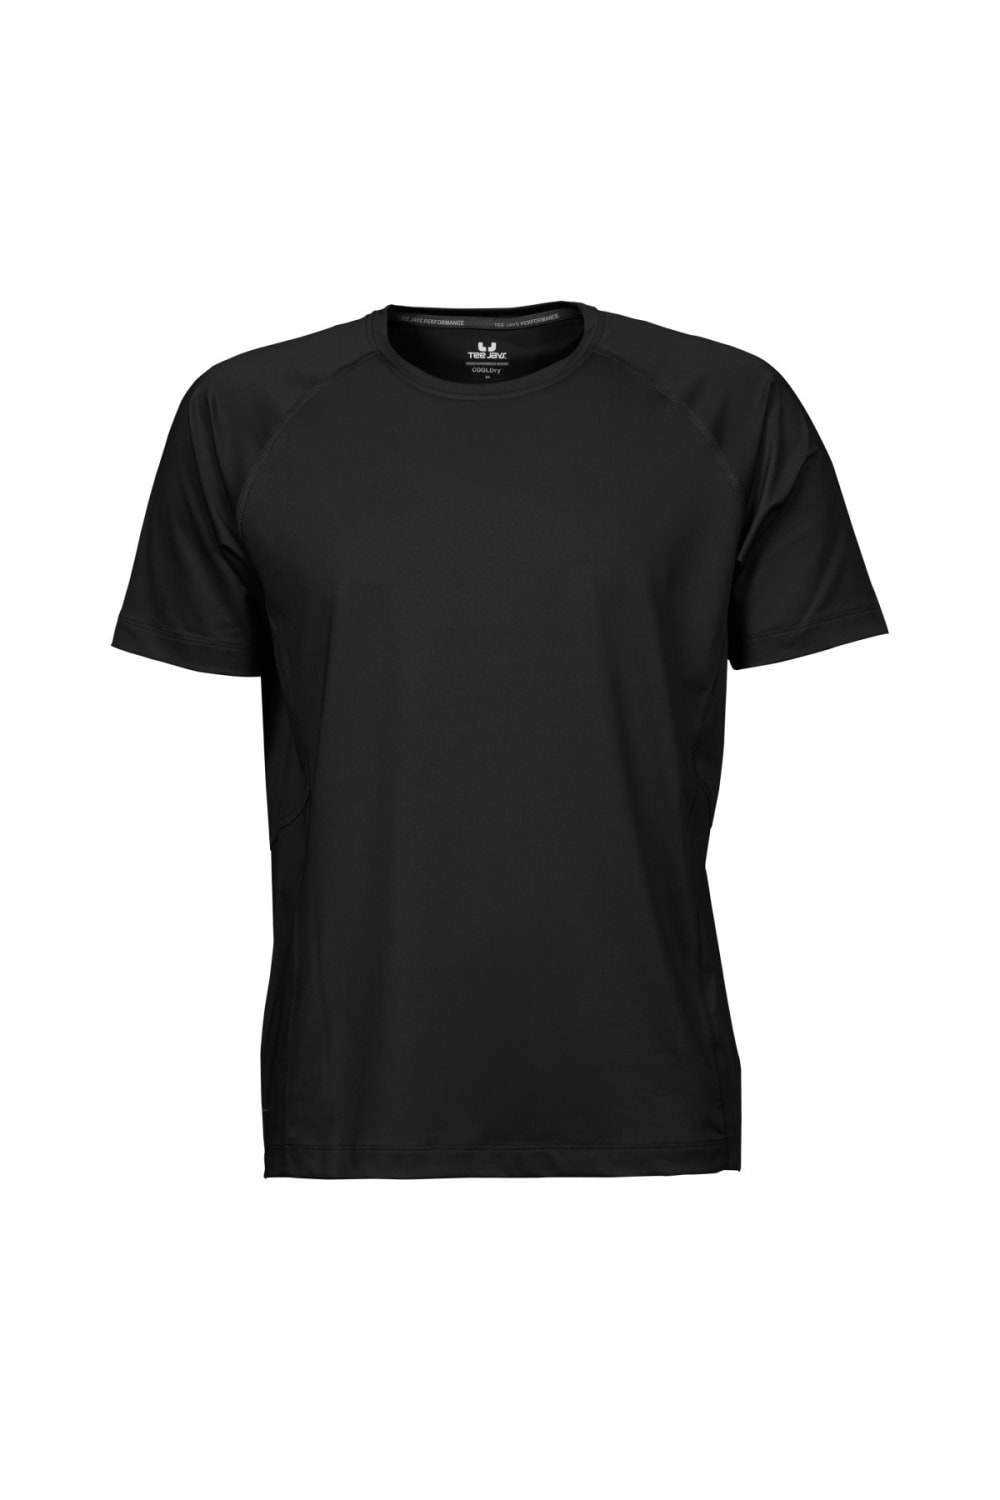 Tee Jays Mens Cool Dry Short Sleeve T-Shirt (Black)